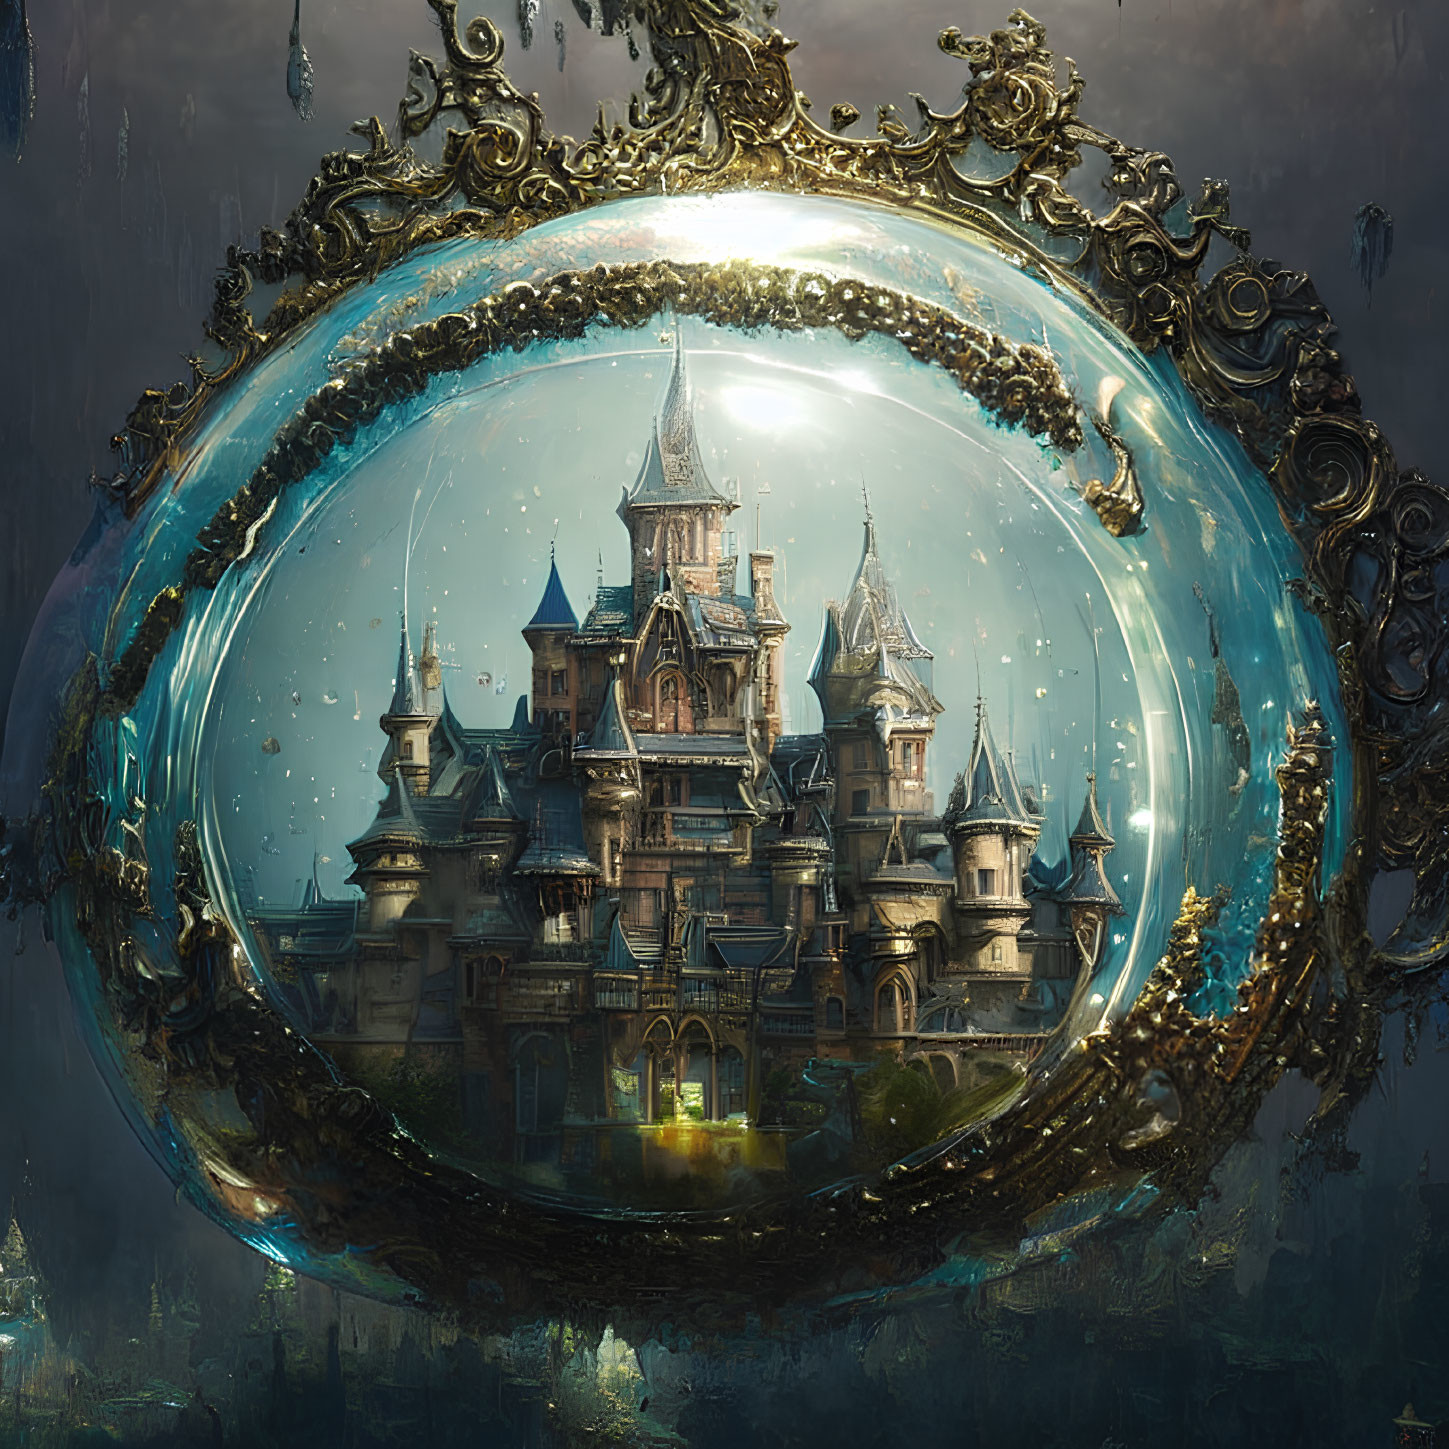 Golden Frame Surrounds Magical Sphere Showing Fantasy Castle